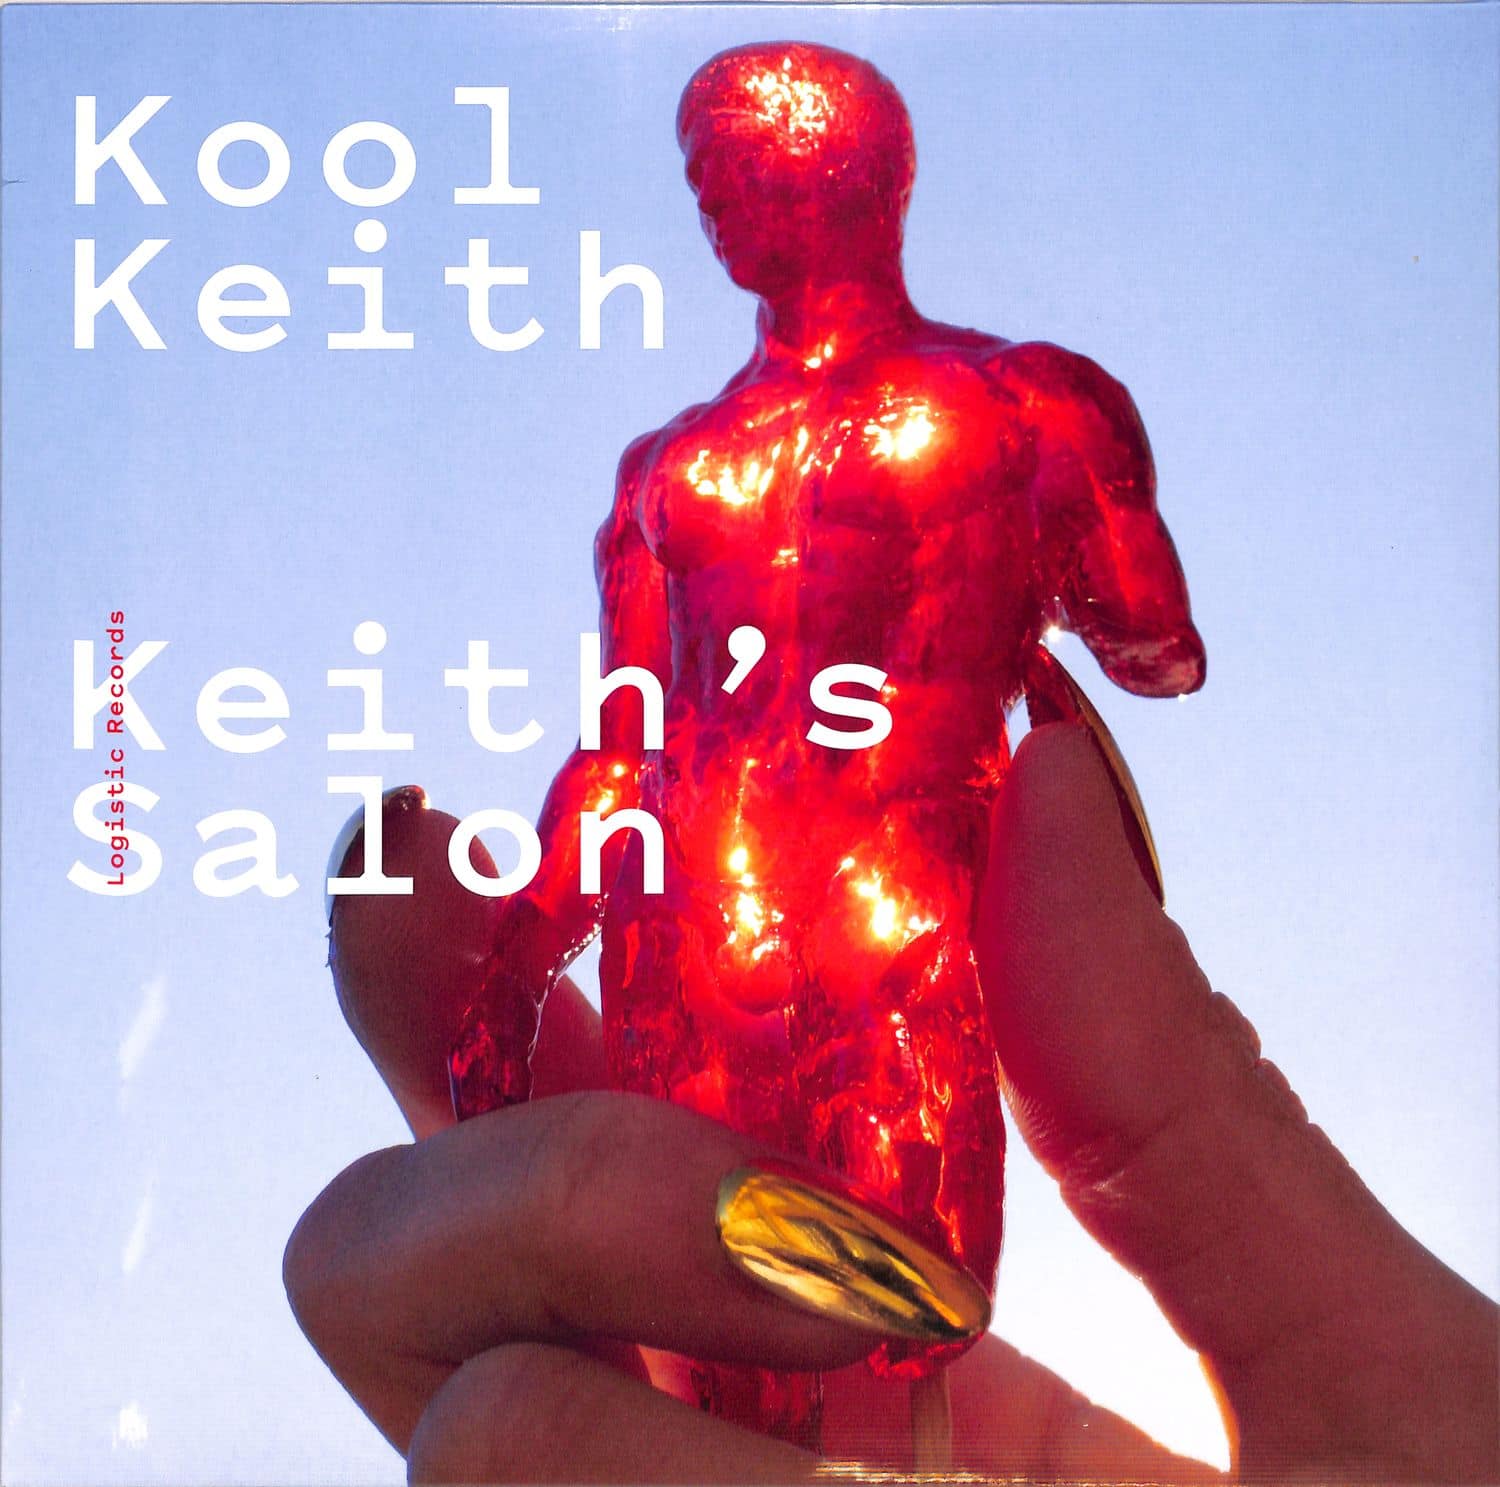 Kool Keith - KEITHS SALON 